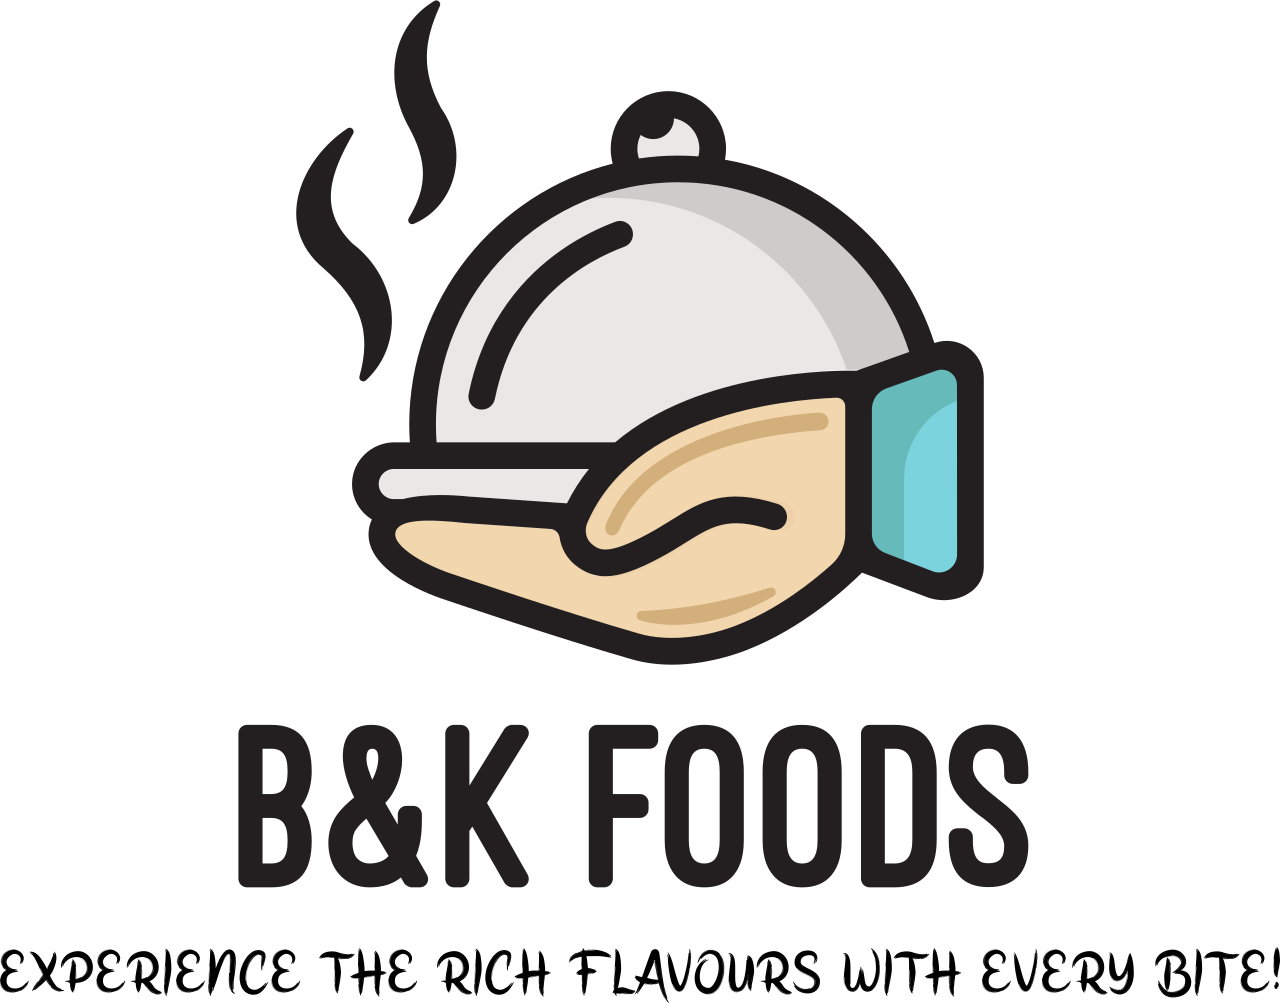 B&K Foods's logo